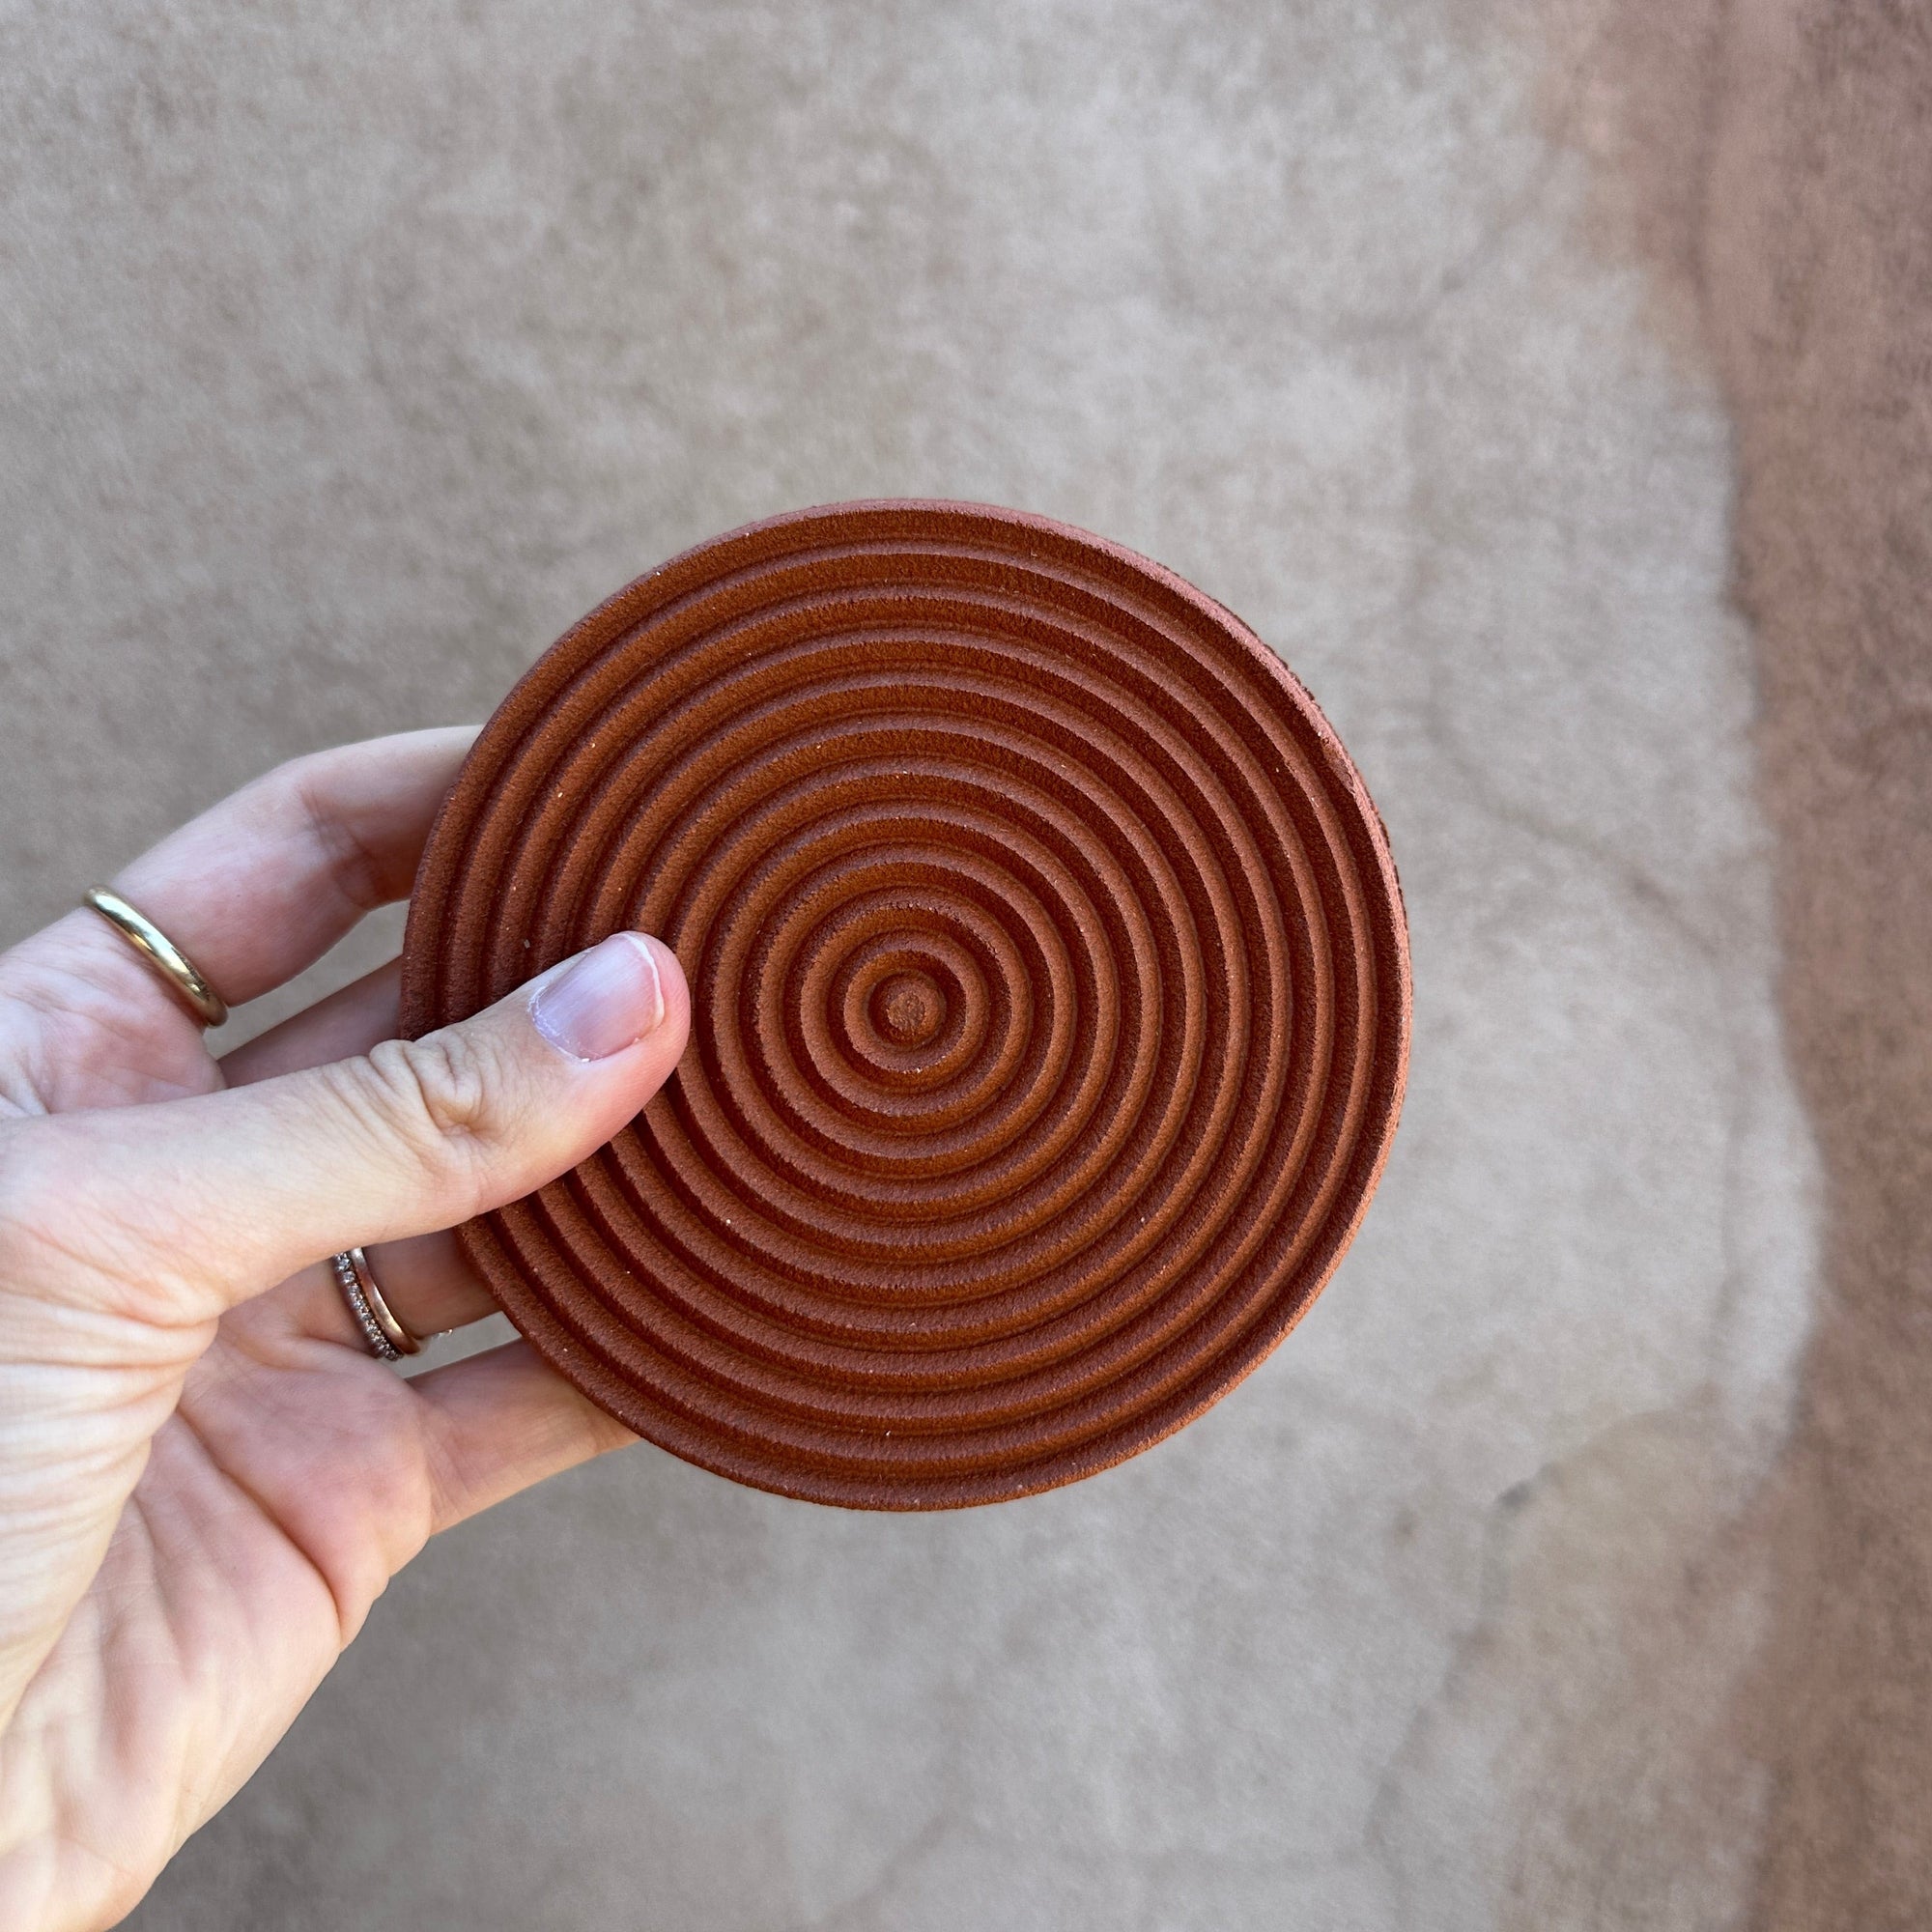 Dust Ceramics - Plinth Dish in Sandia